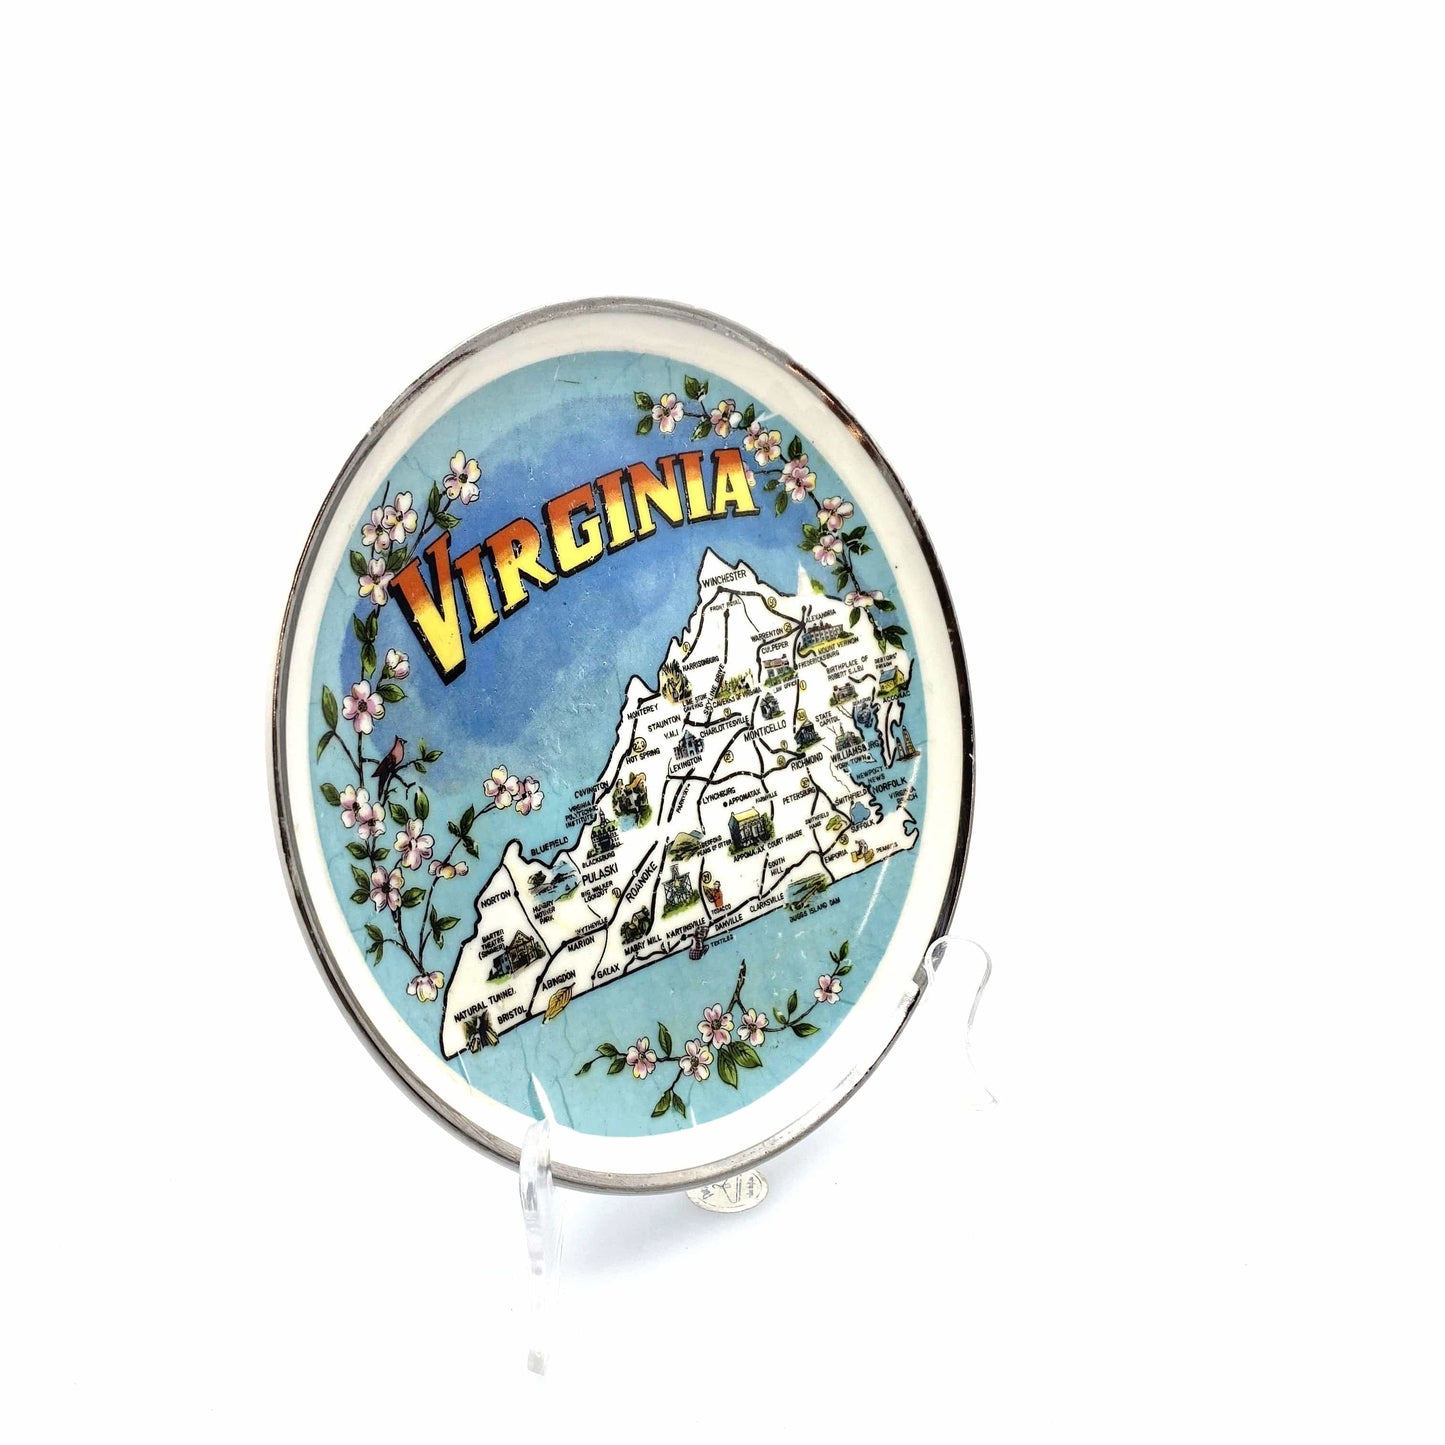 Vintage State Souvenir Plate “VIRGINIA” Collectible, White - 7.75”